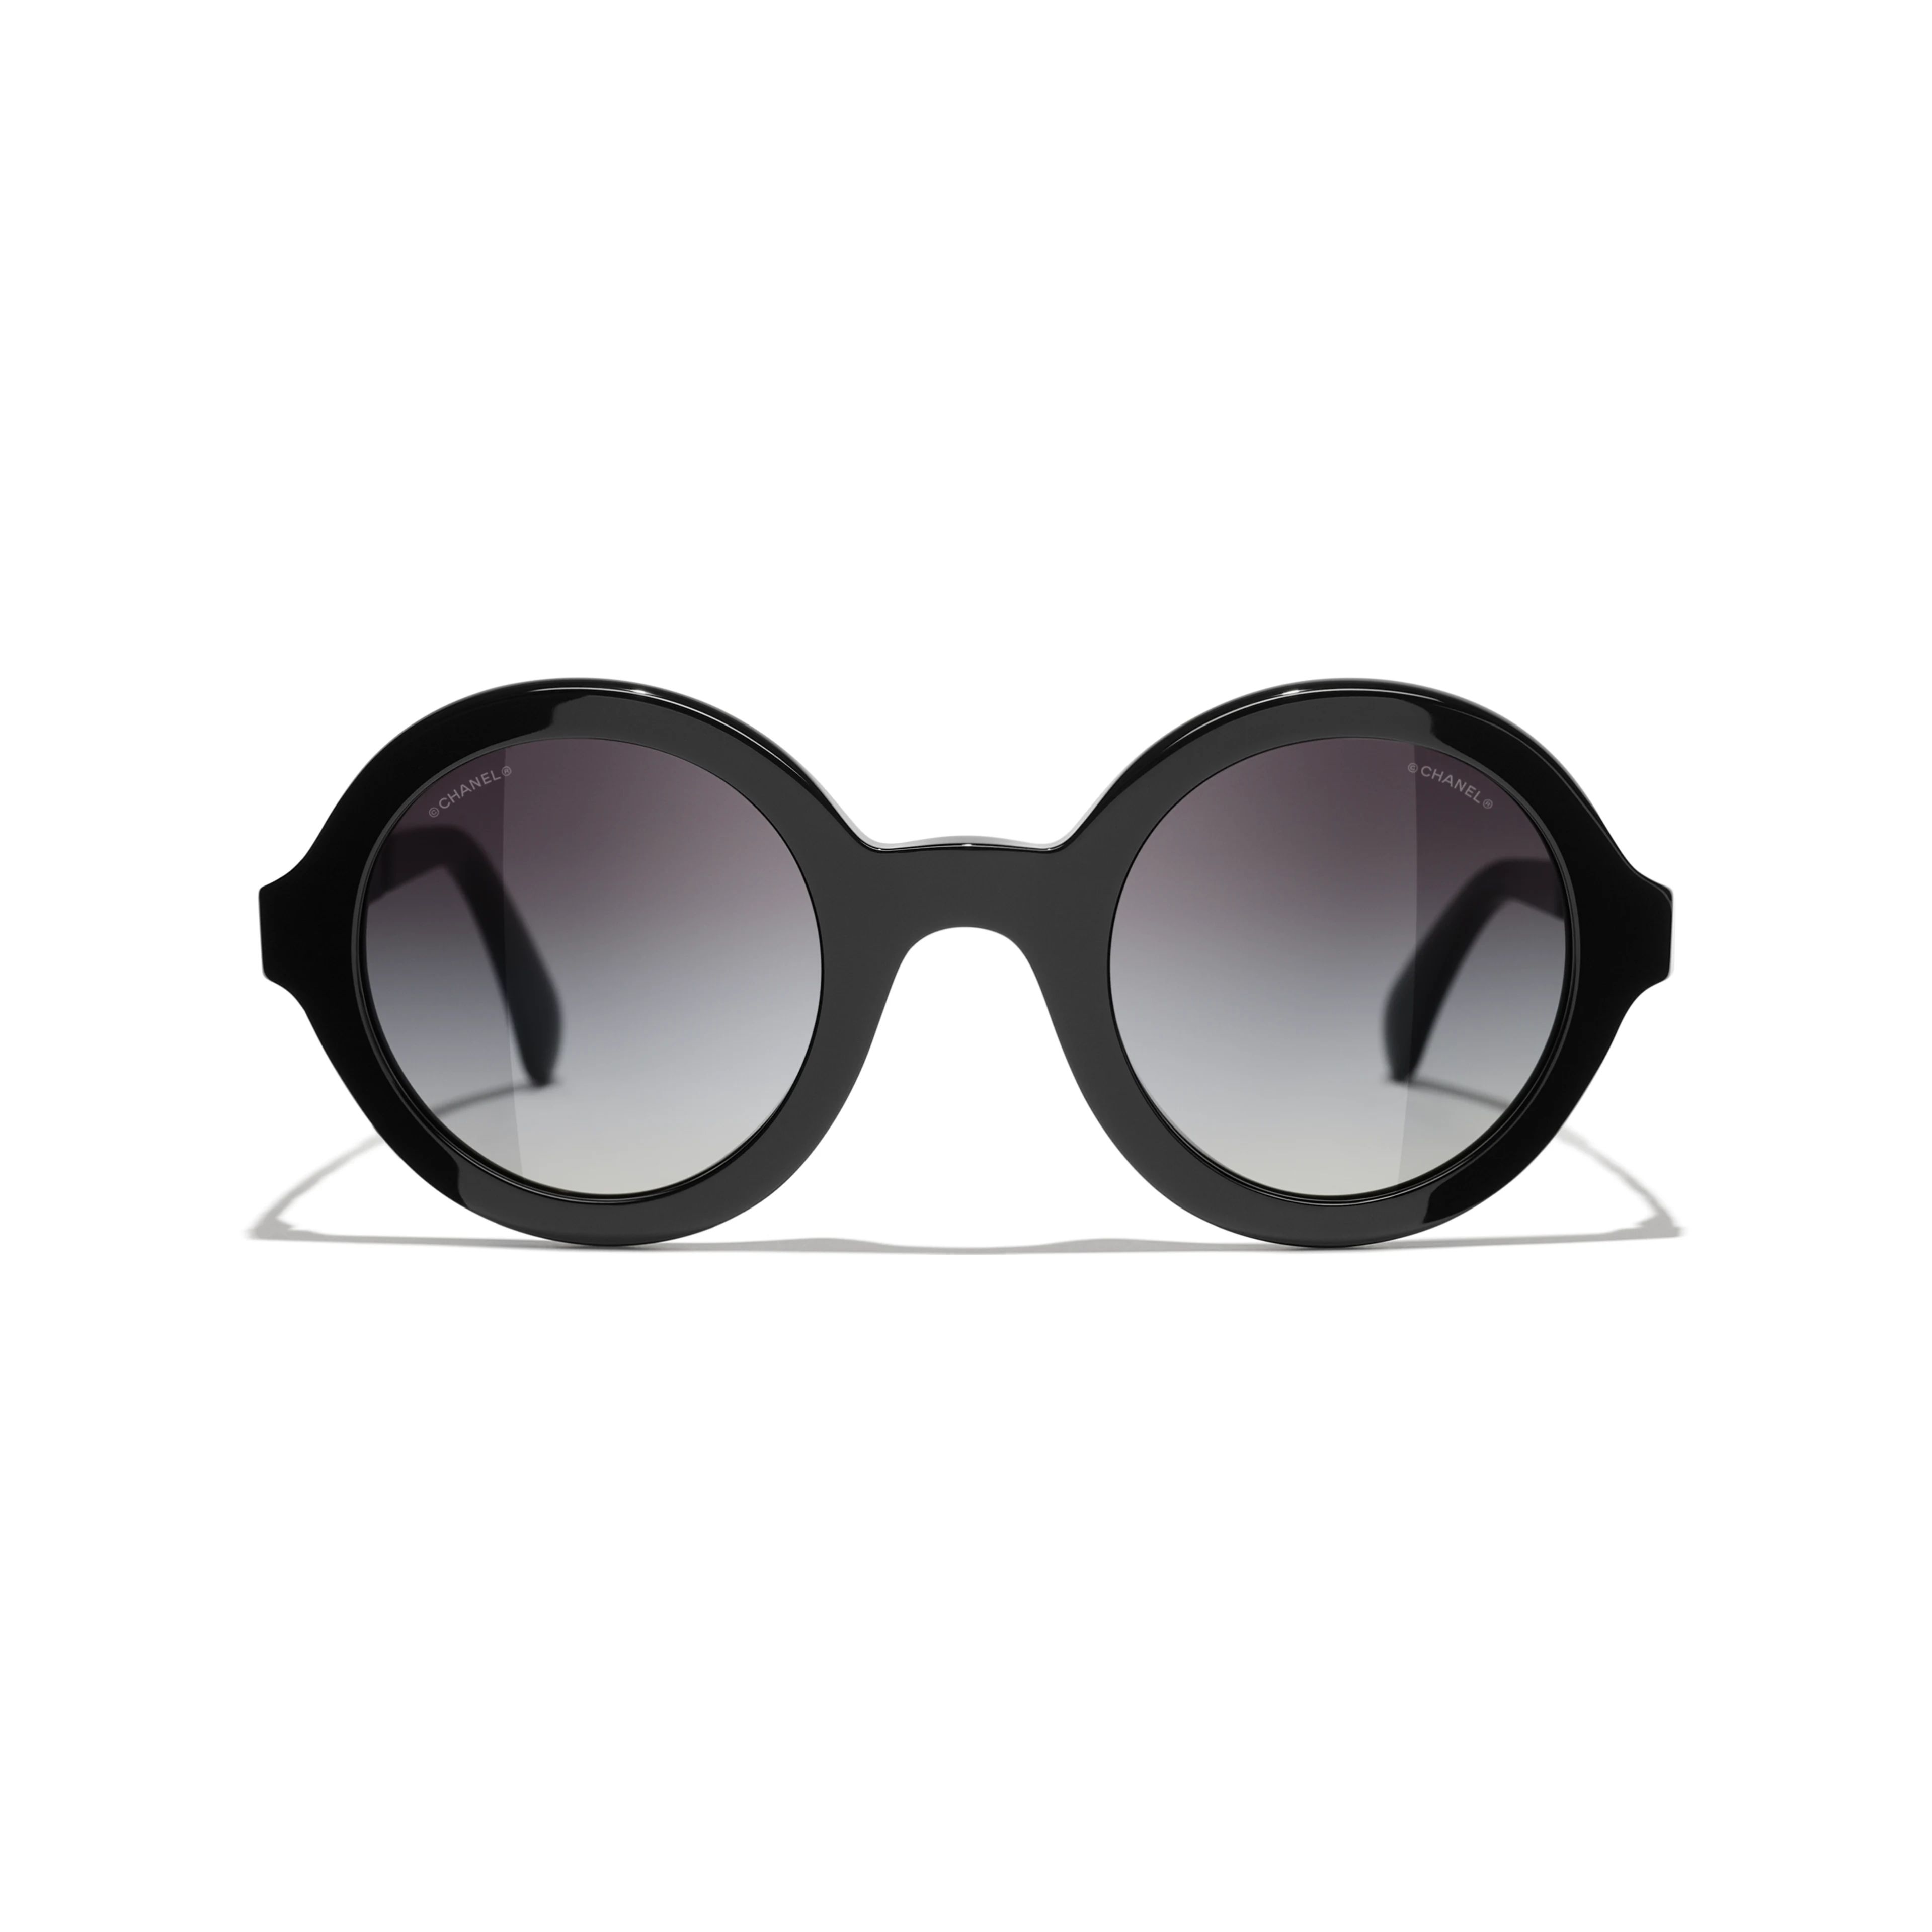 Sunglasses: Round Sunglasses, acetate & metal — Fashion | CHANEL | Chanel, Inc. (US)